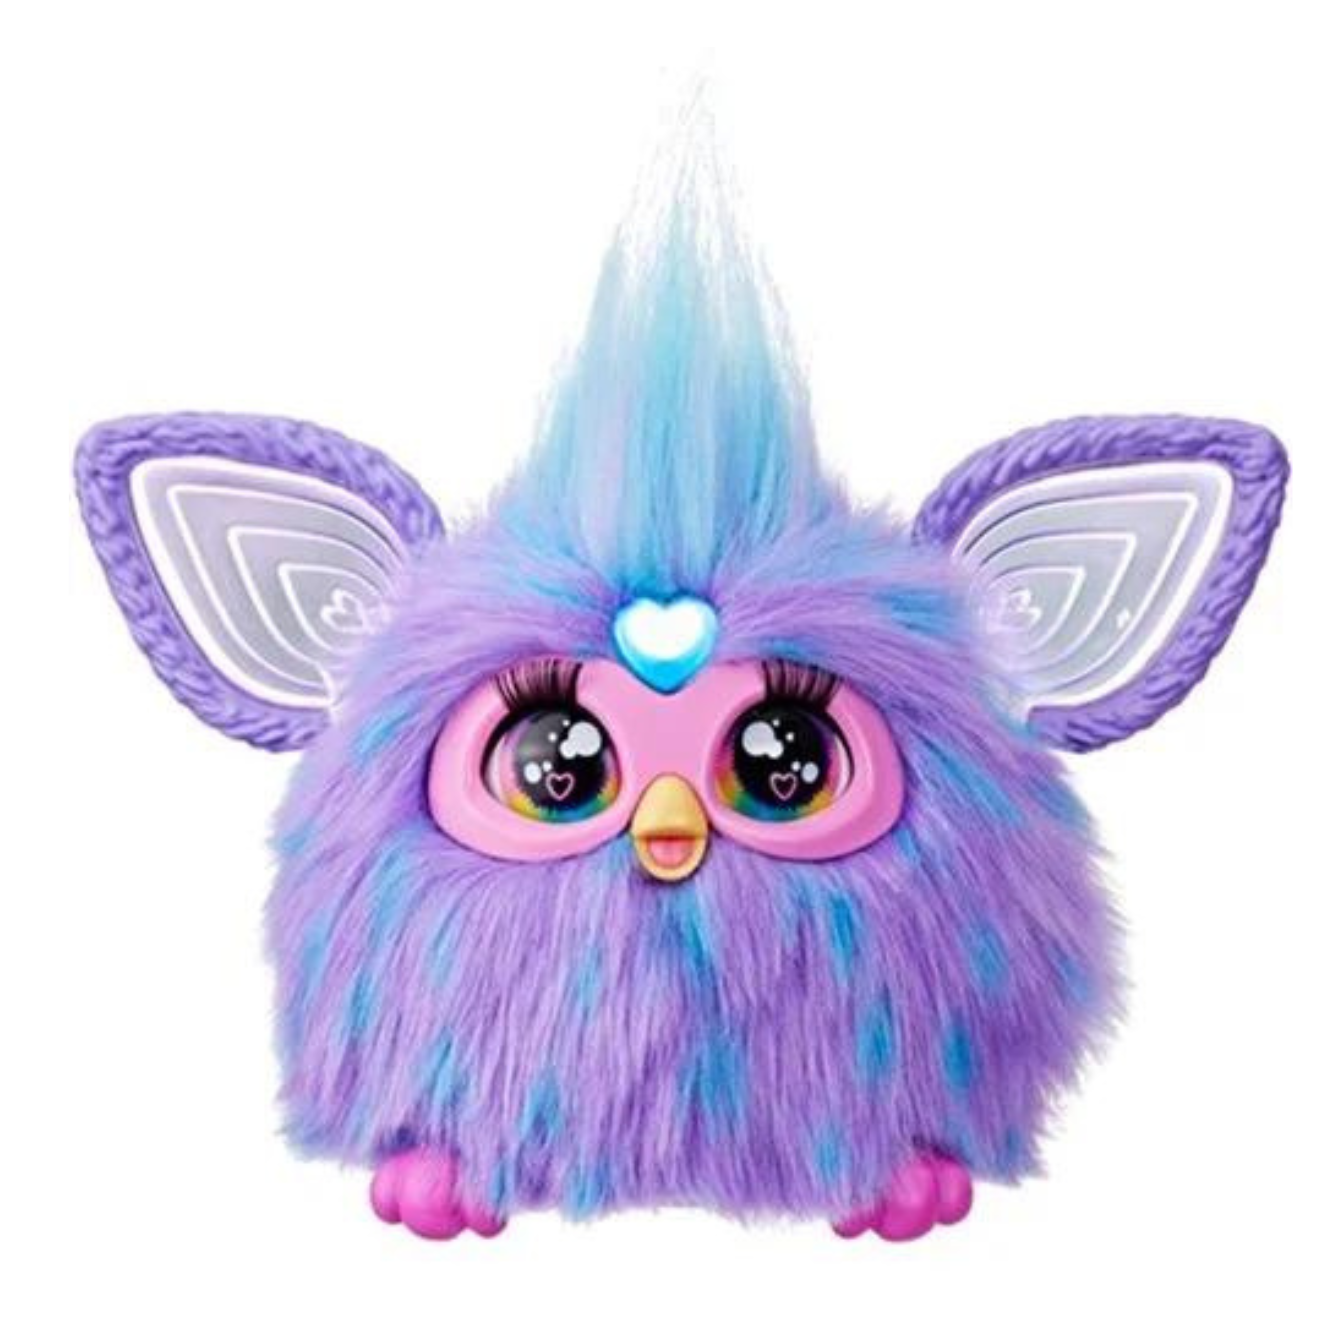 Furby Purple